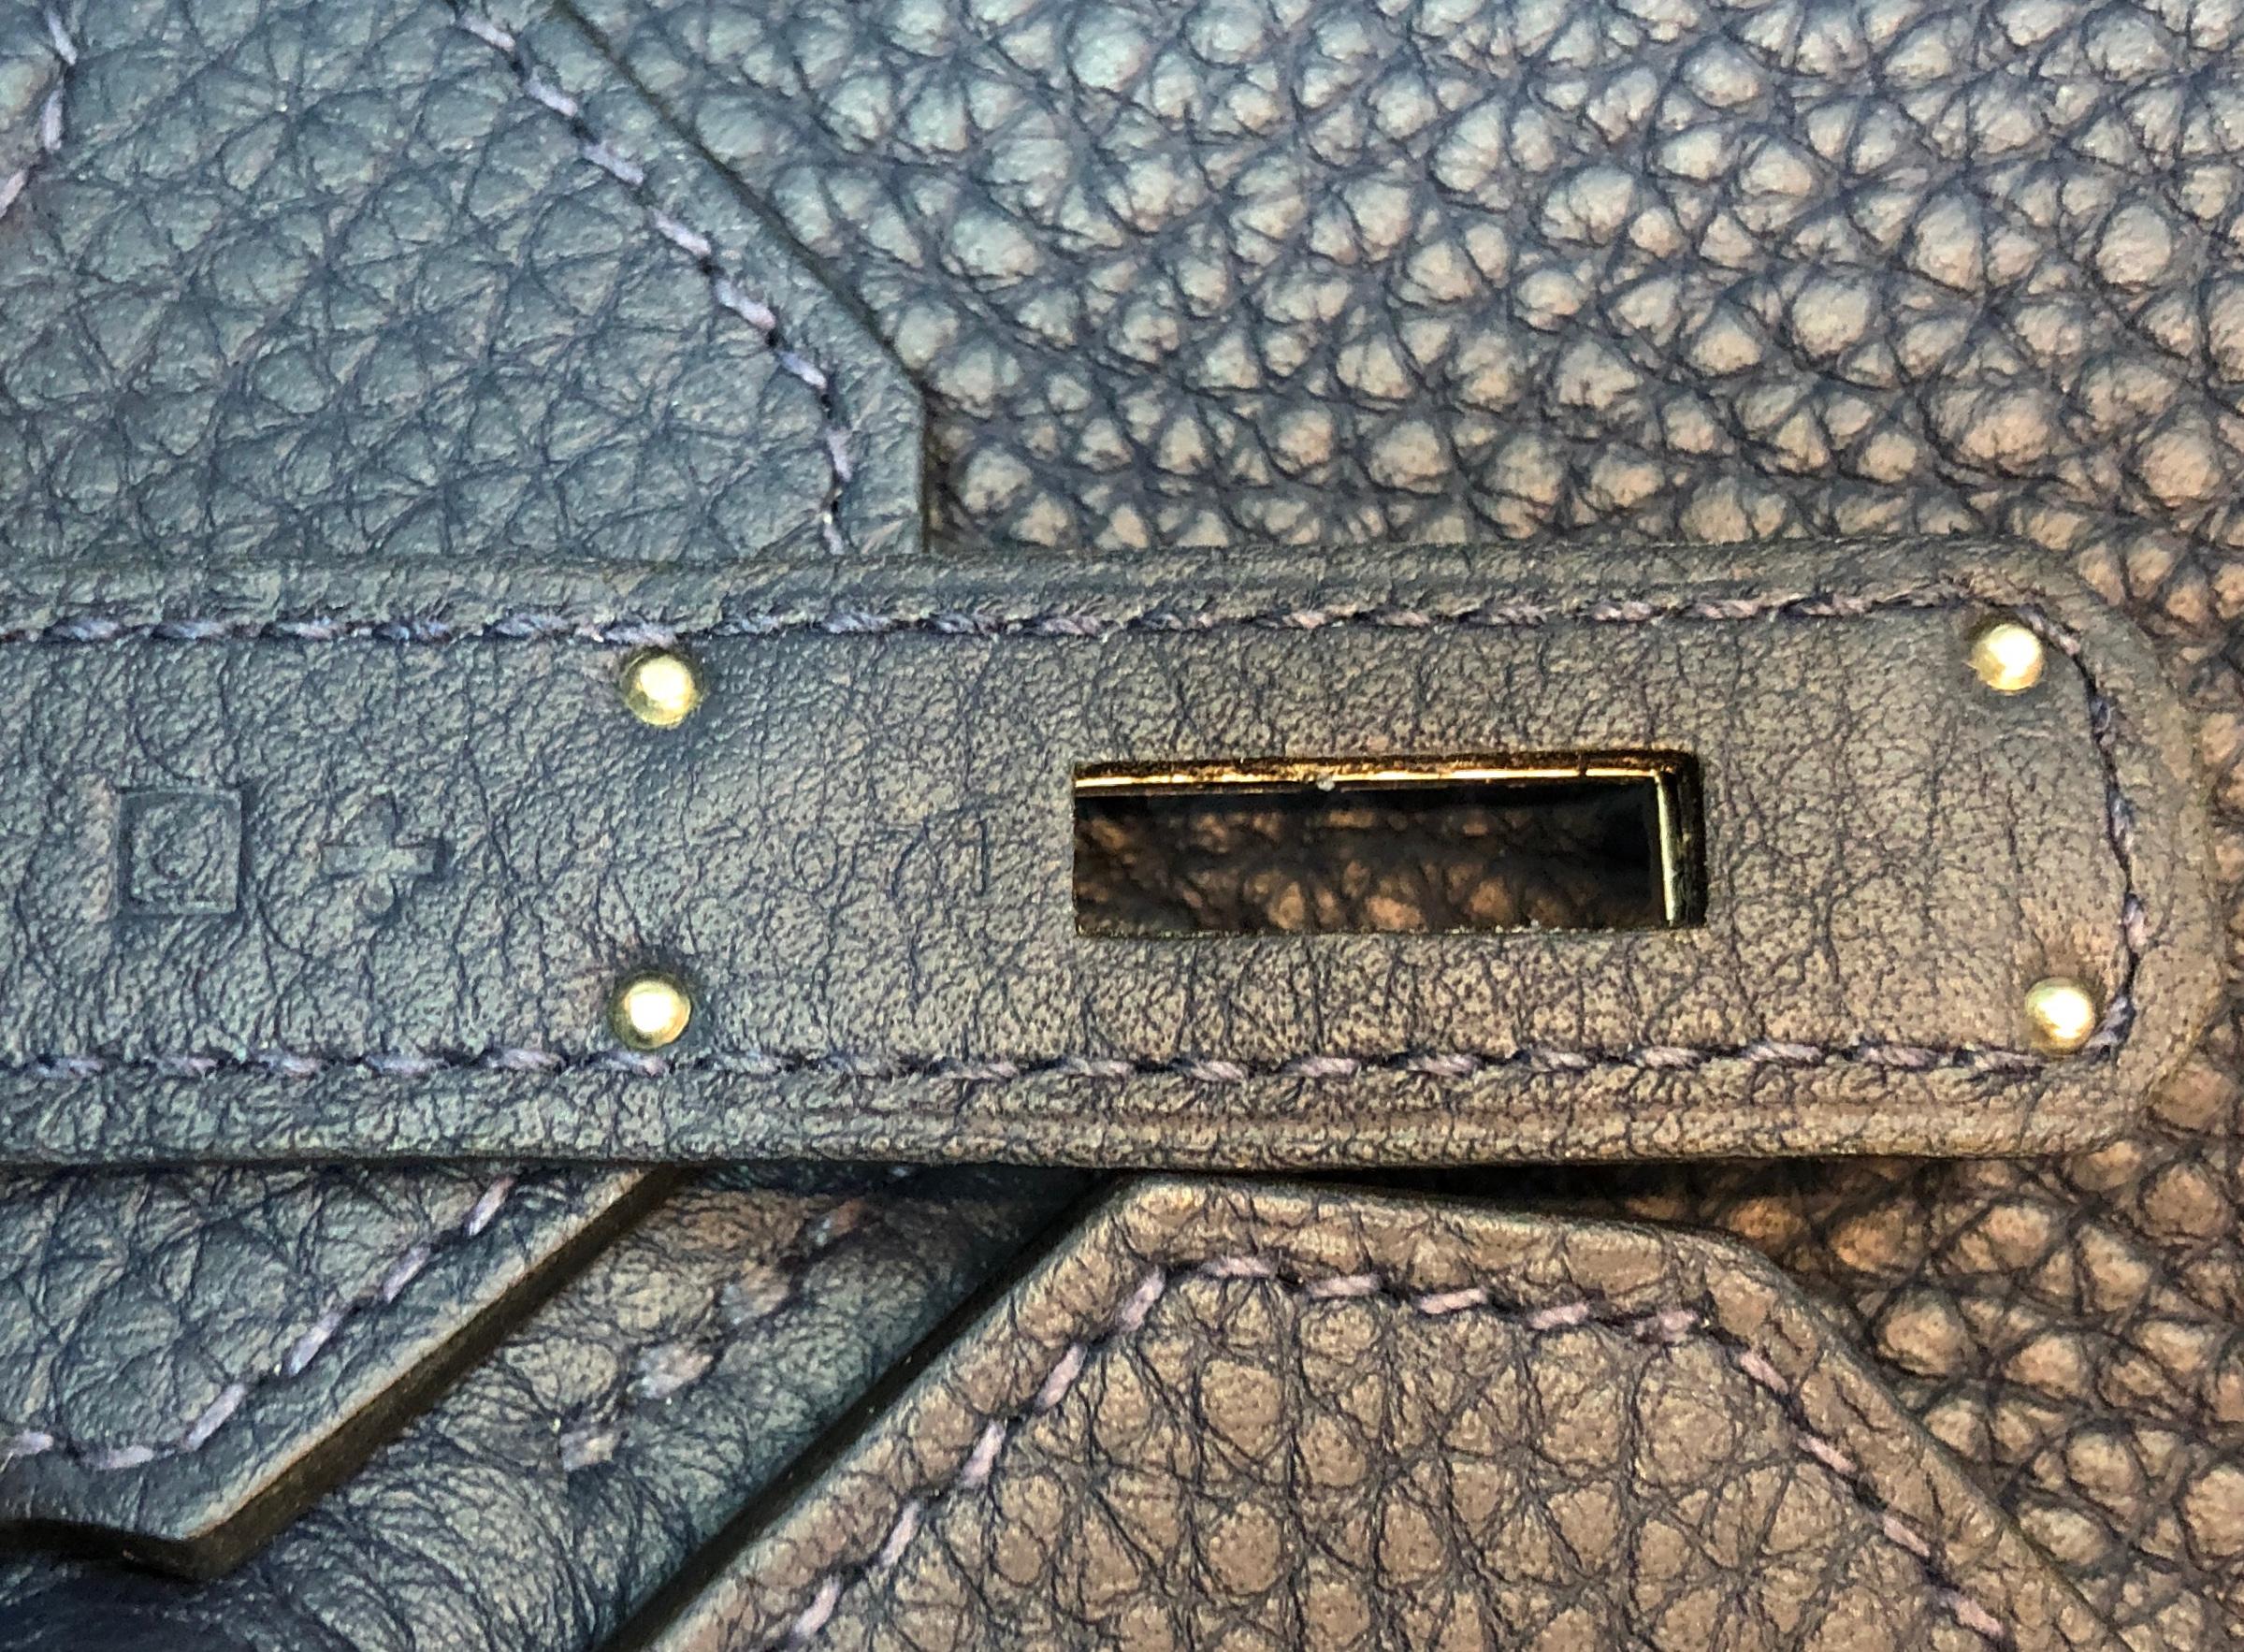 Hermes Birkin Handbag Bleu de Malte Clemence with Palladium Hardware 35 2